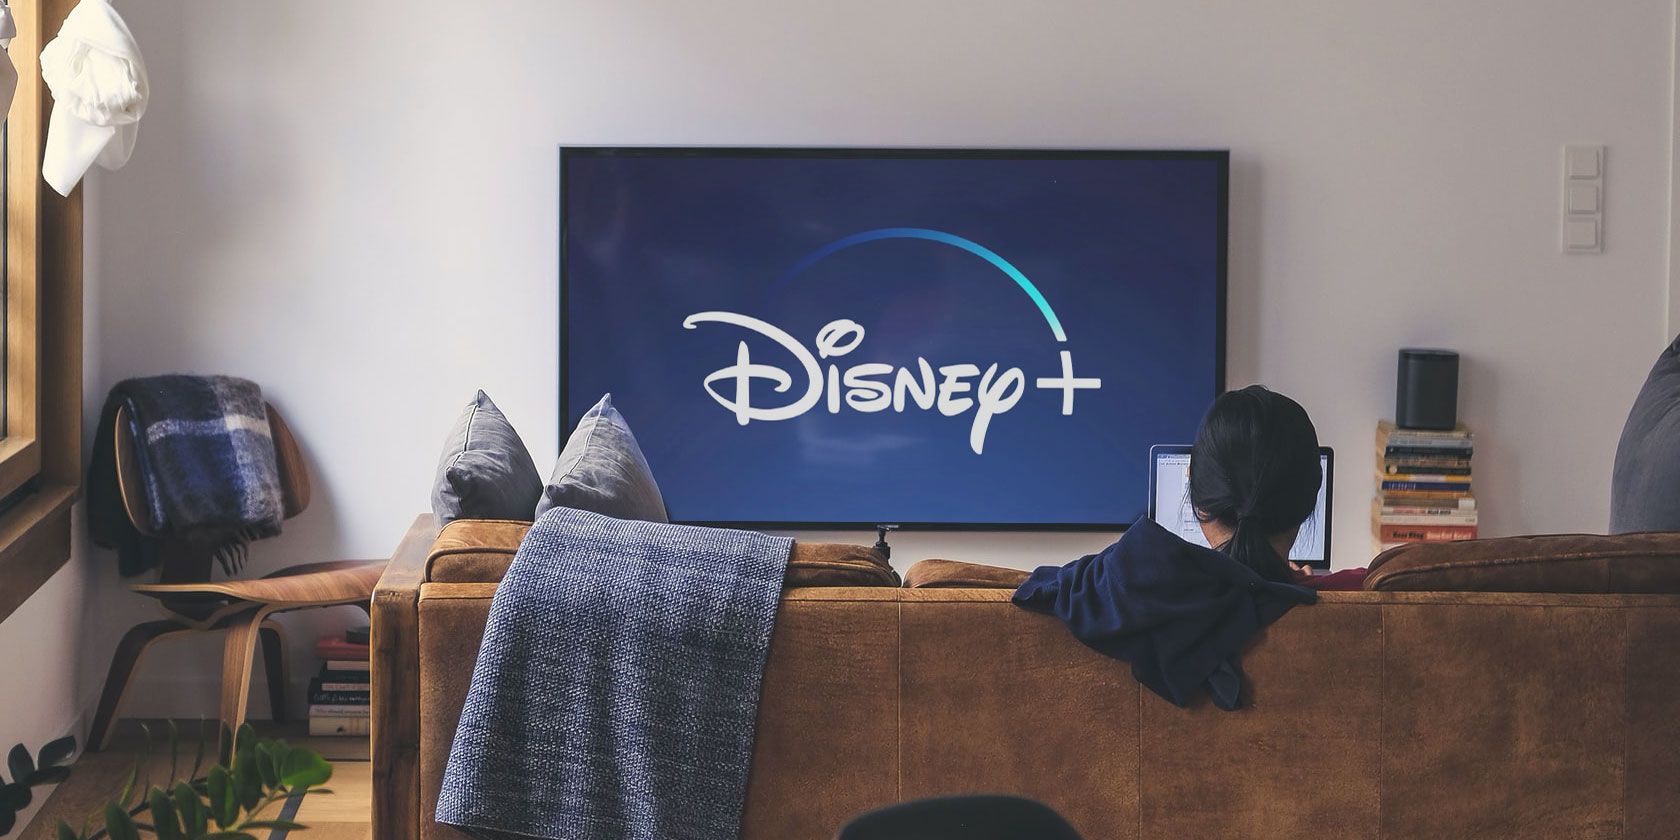 Disney+ logo on a large TV screen